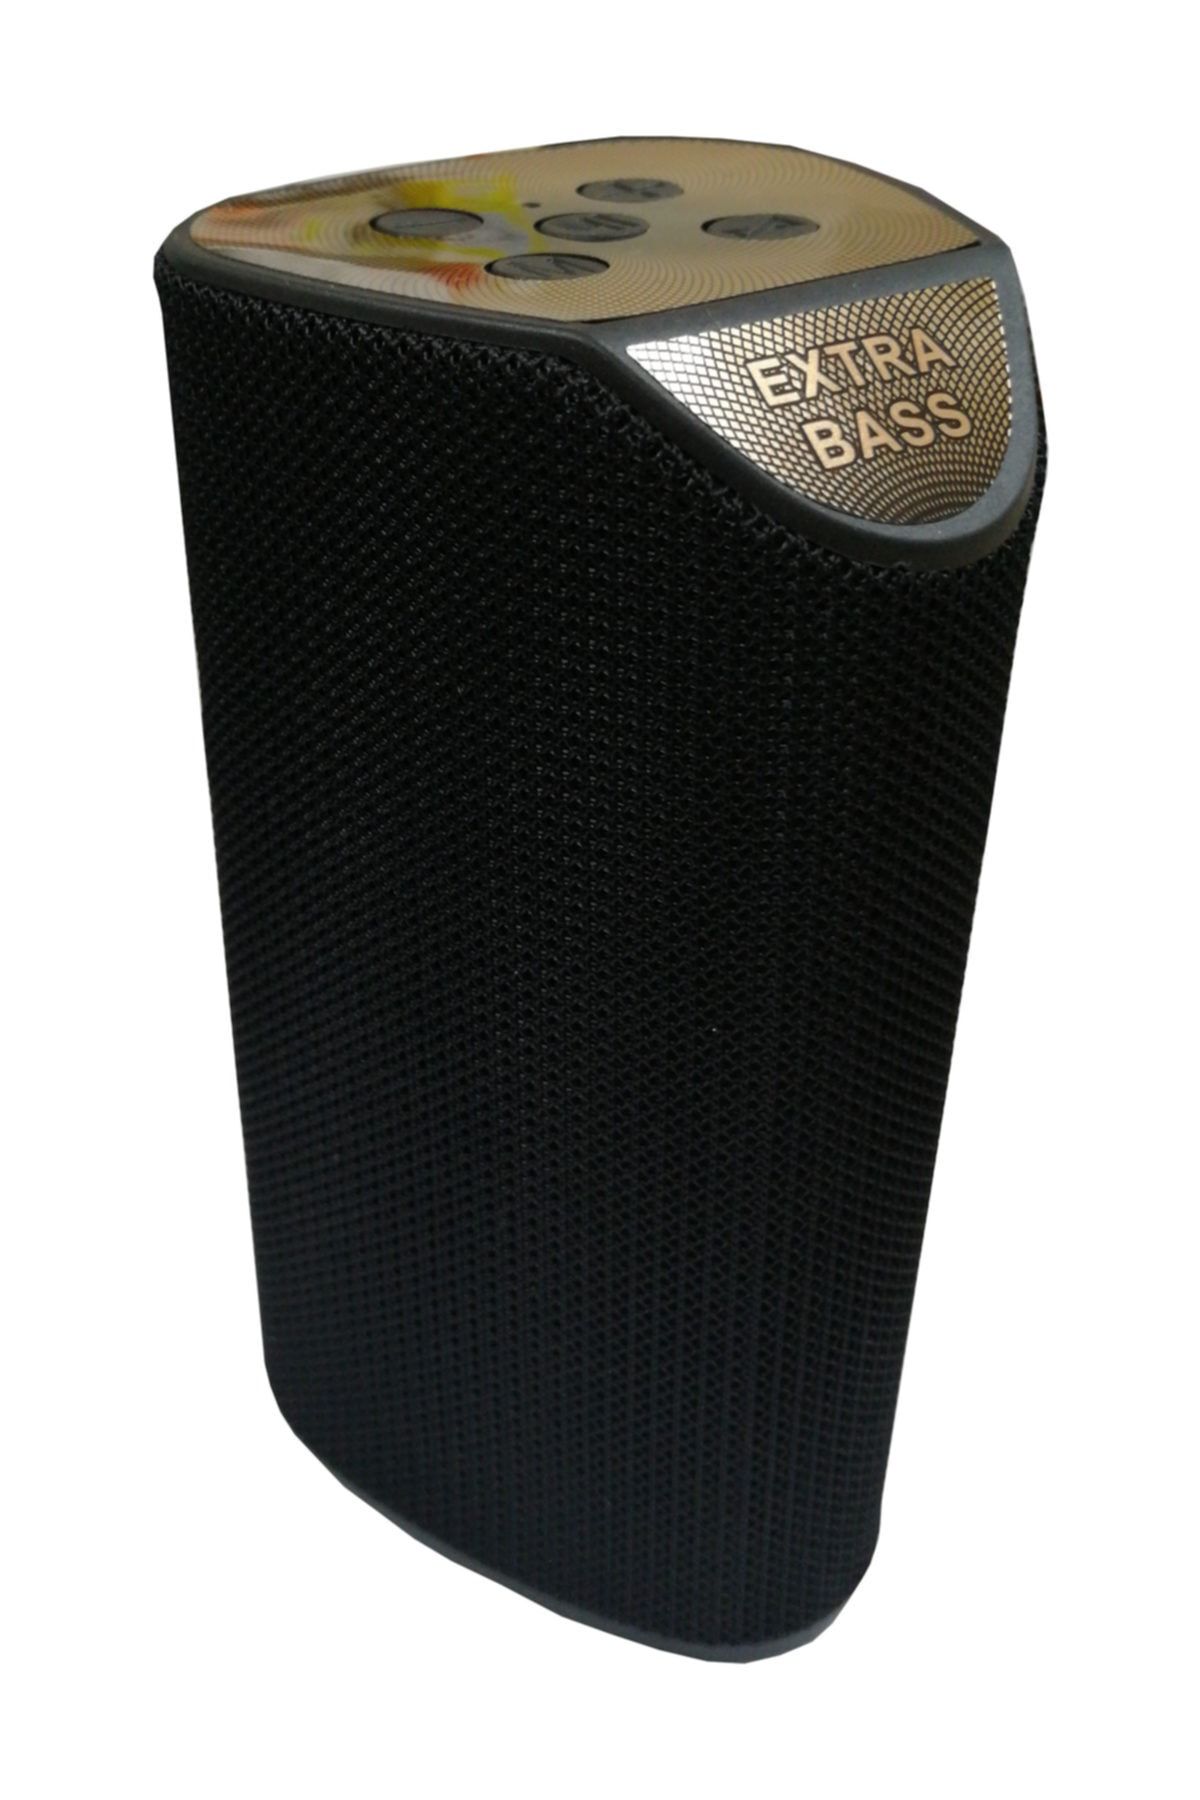 Platoon Yüksek Bass Kablosuz Speaker Radyo - Mp3 - Bluetooth Hoparlör Siyah